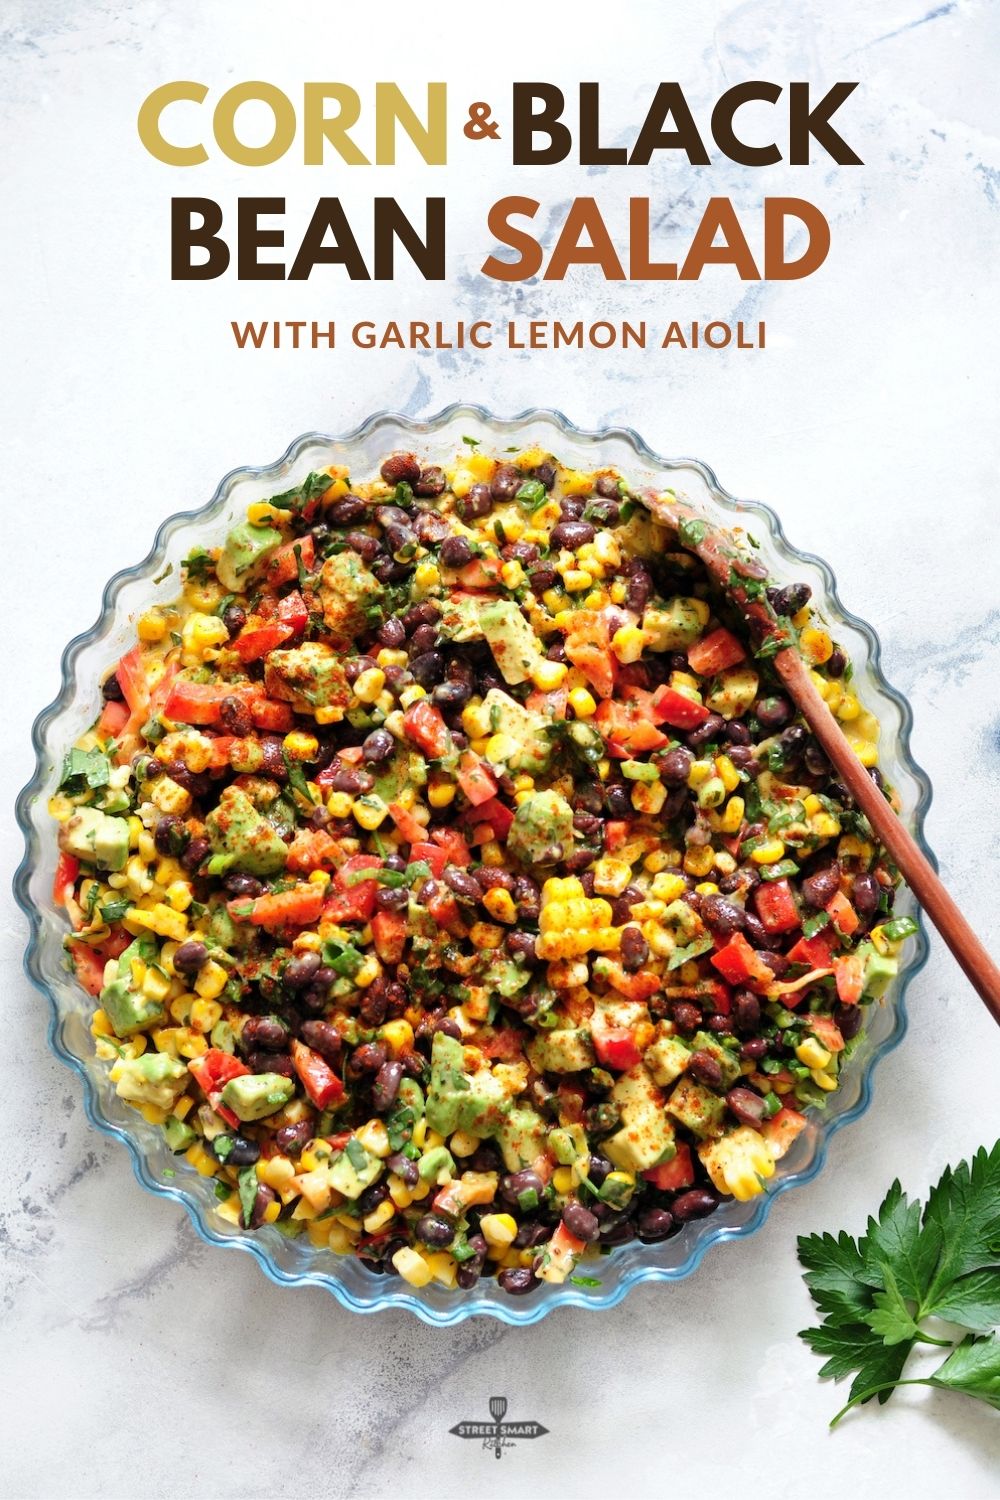 Corn and Black Bean Salad with Garlic Lemon Aioli